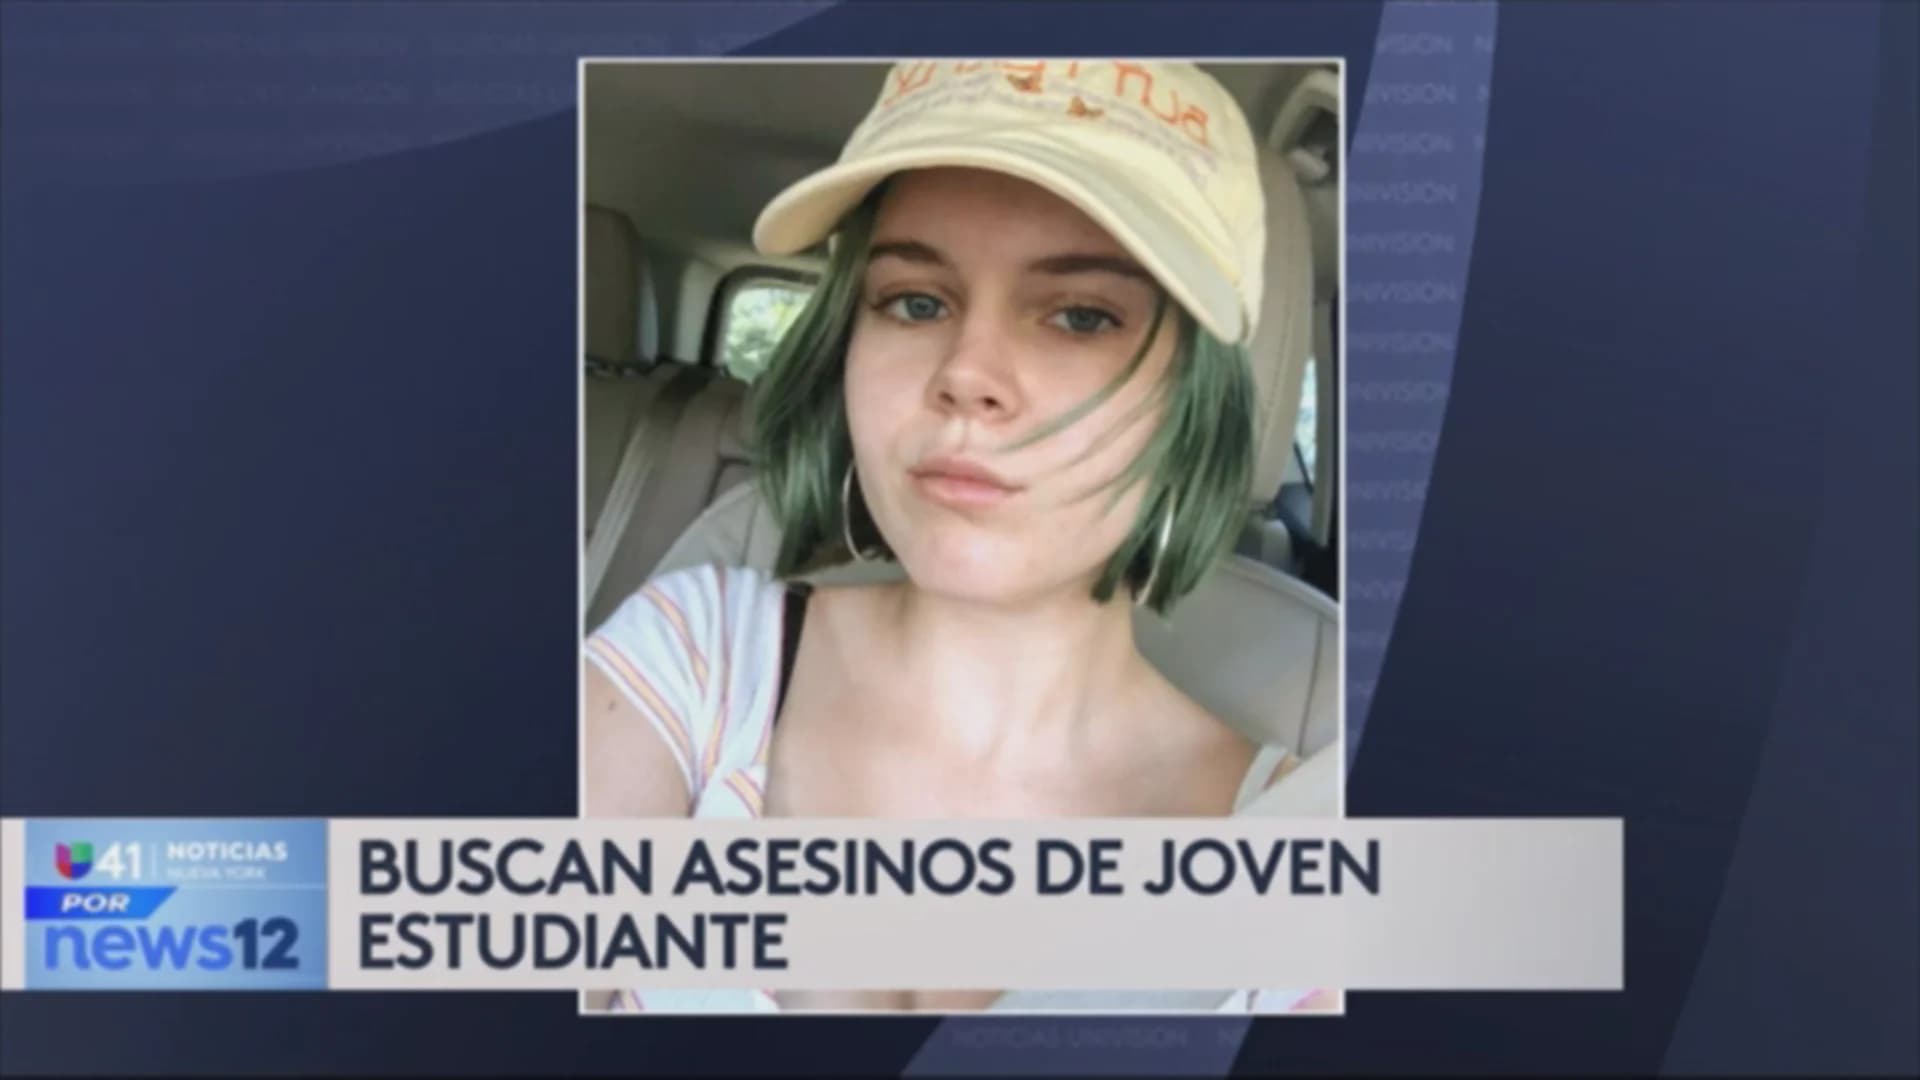 Univision 41 News Brief: Autoridades buscan responsables de apuñalar estudiante